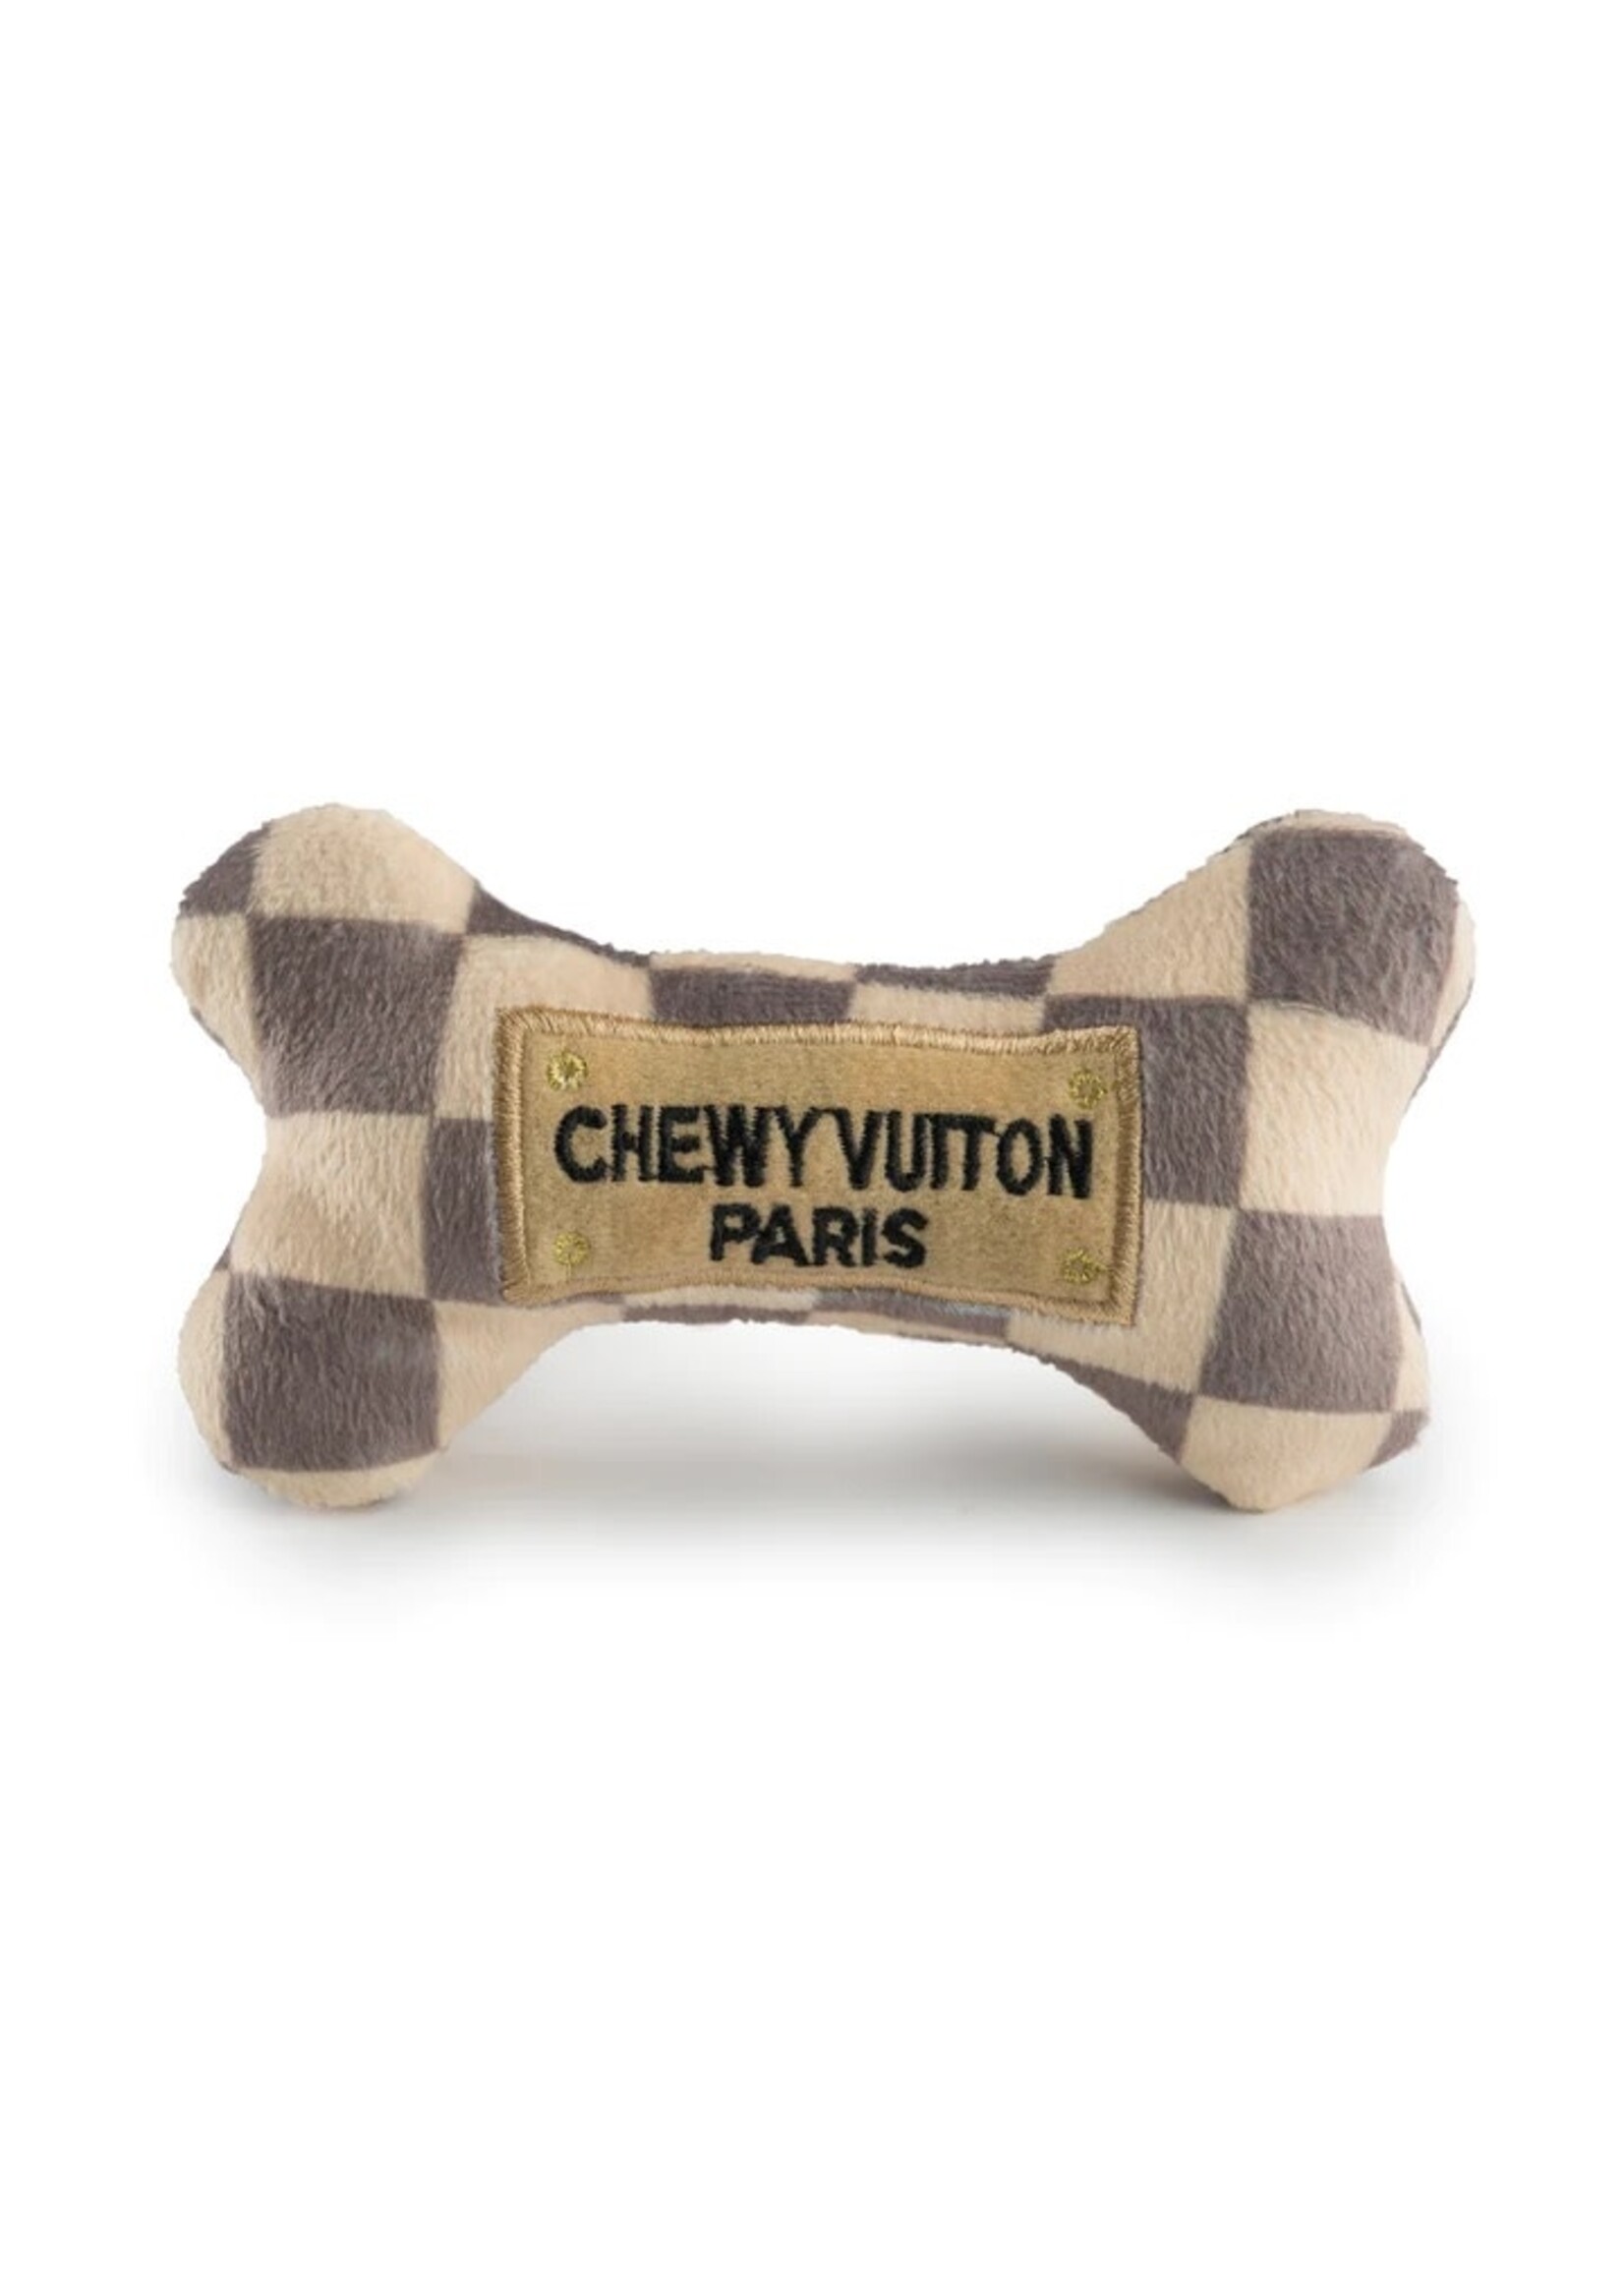 Haute Diggity Dog Checker Chewy Vuiton Bones Squeaker Dog Toy | XL